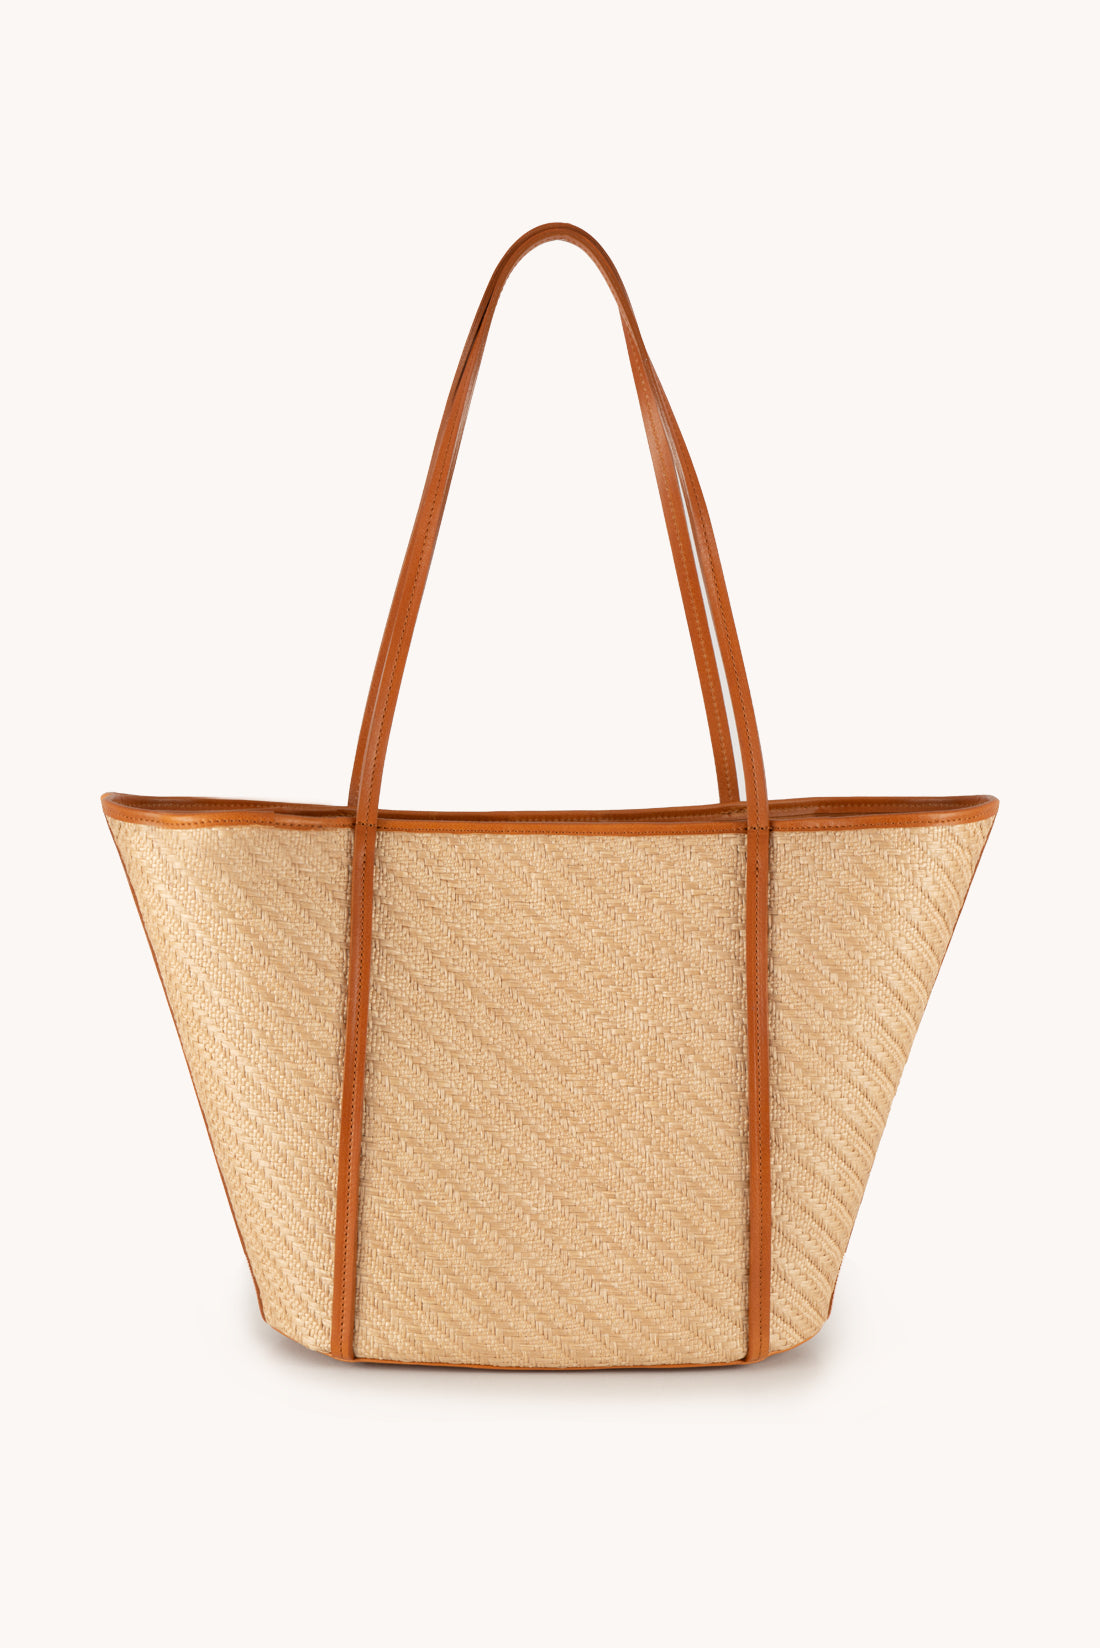 Francois Leather Basket - Limited Edition